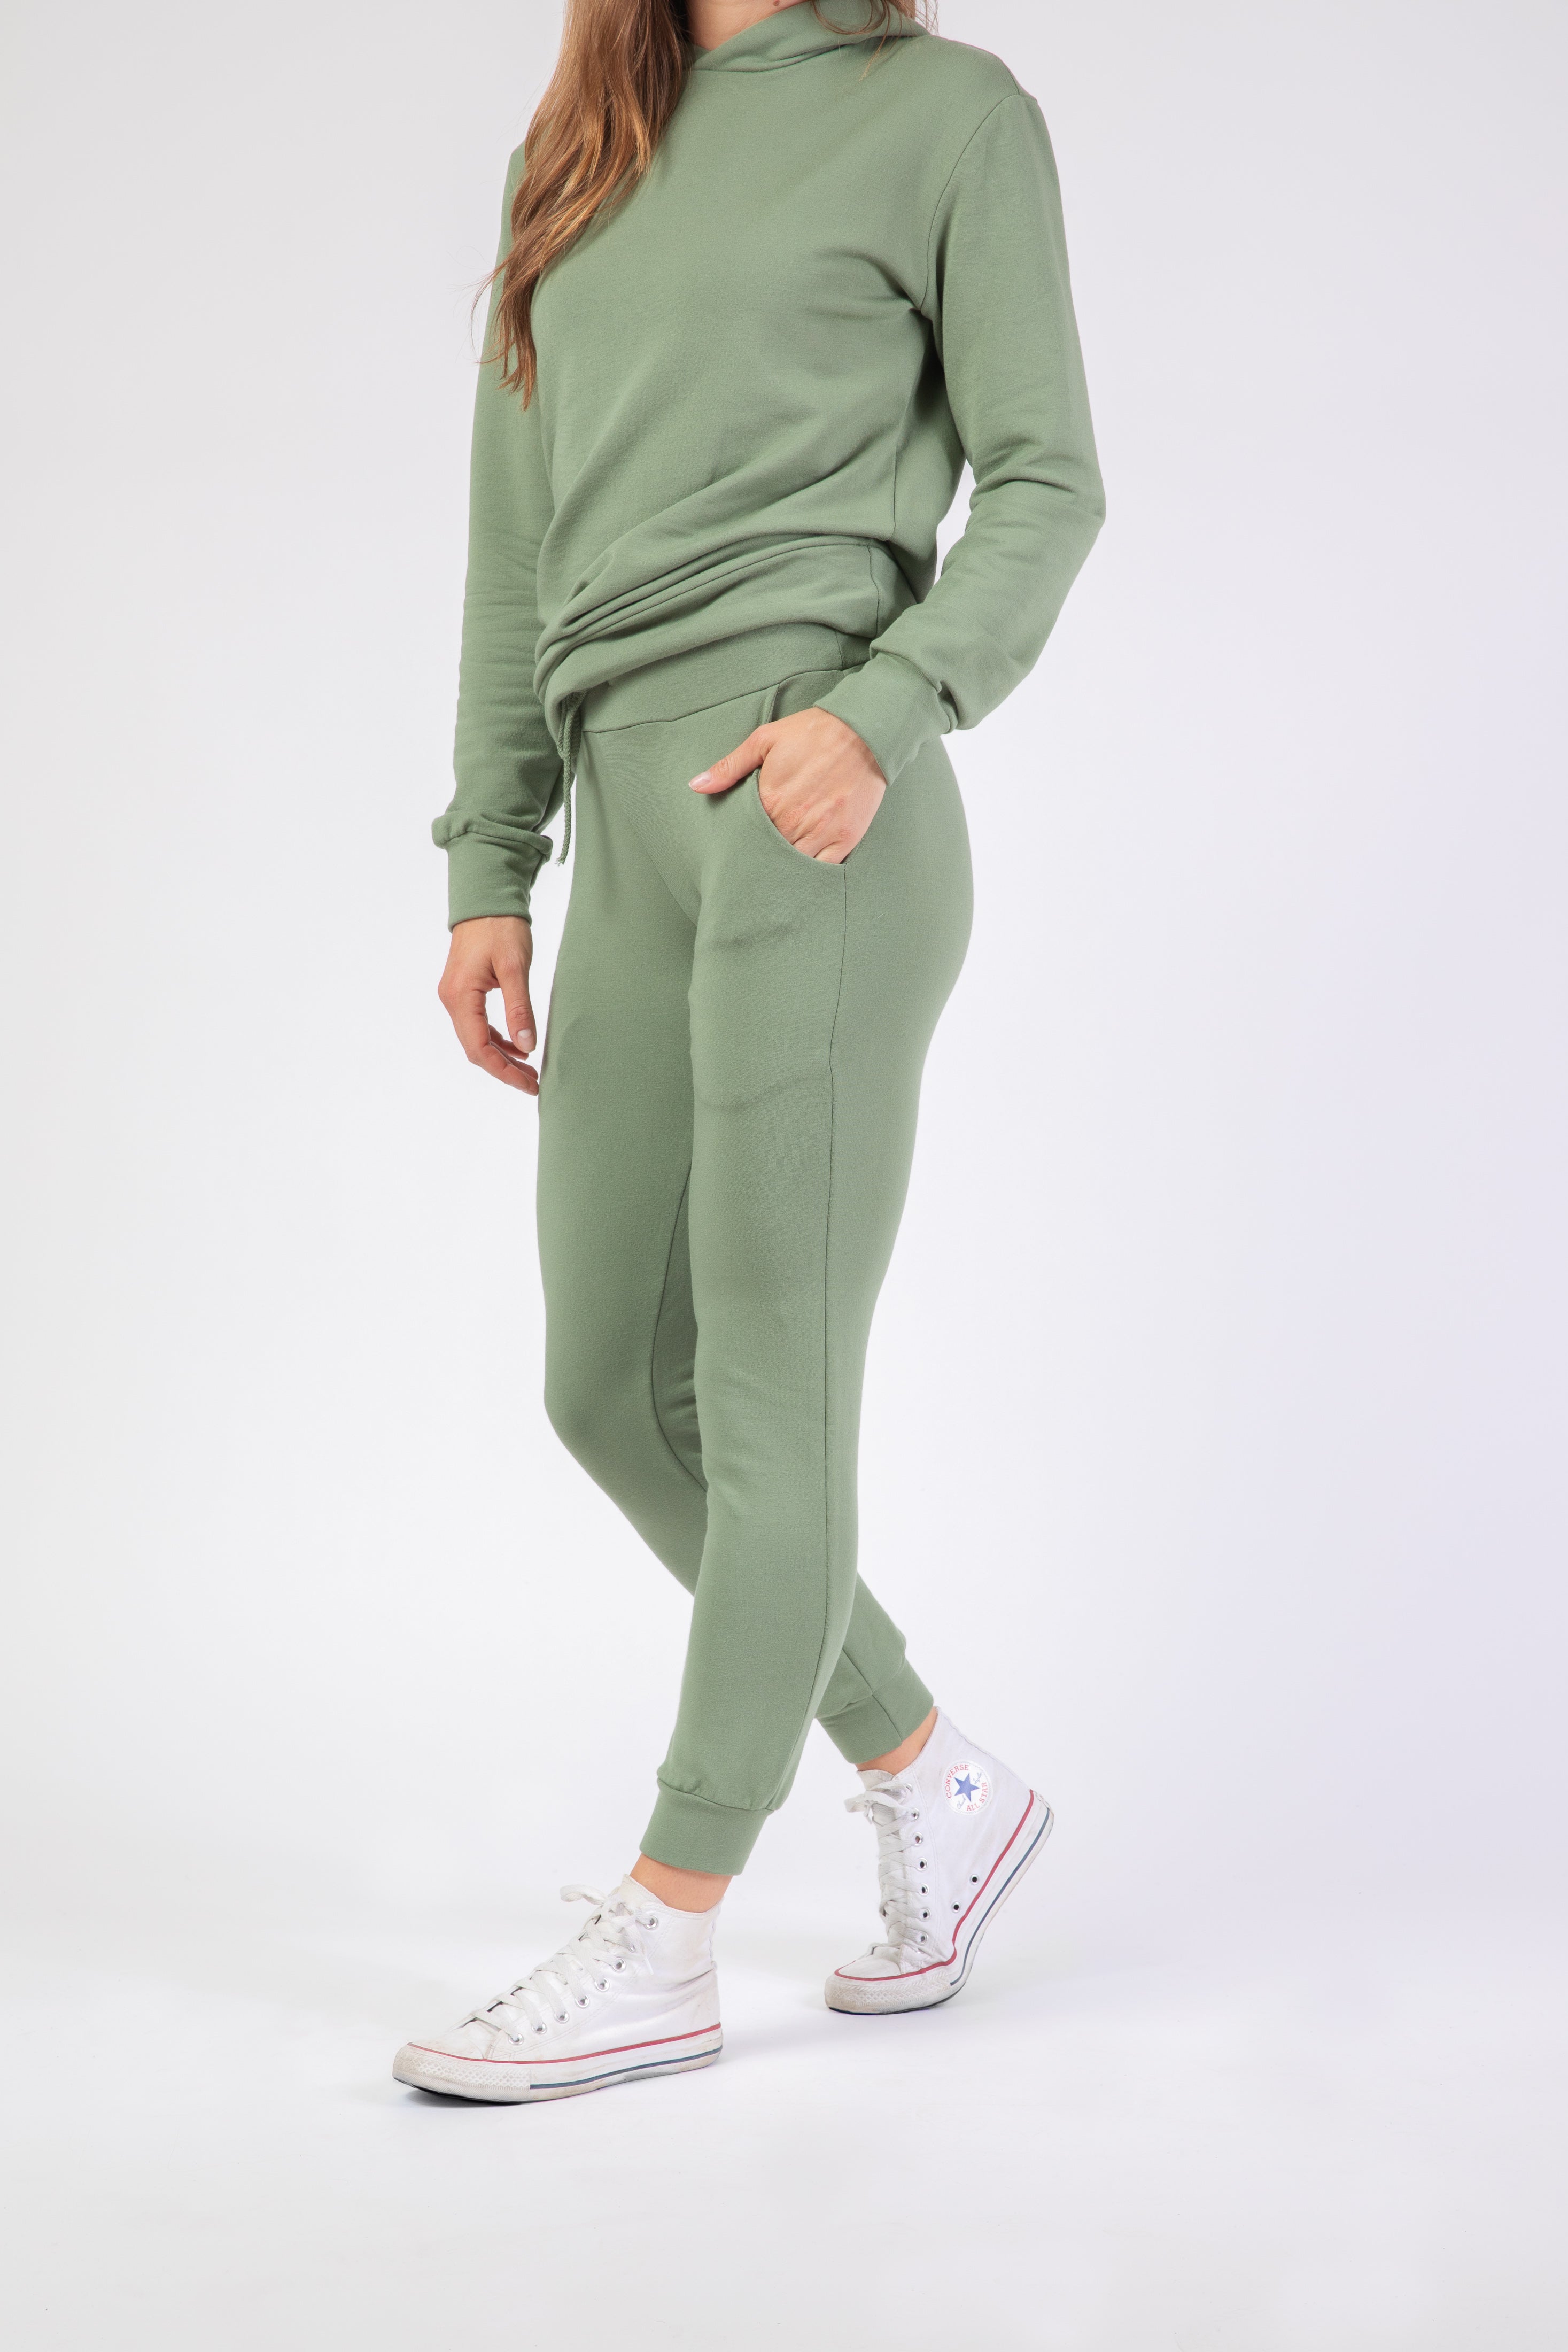 Buy the TLF Women Sage Green Activewear Top S NWT